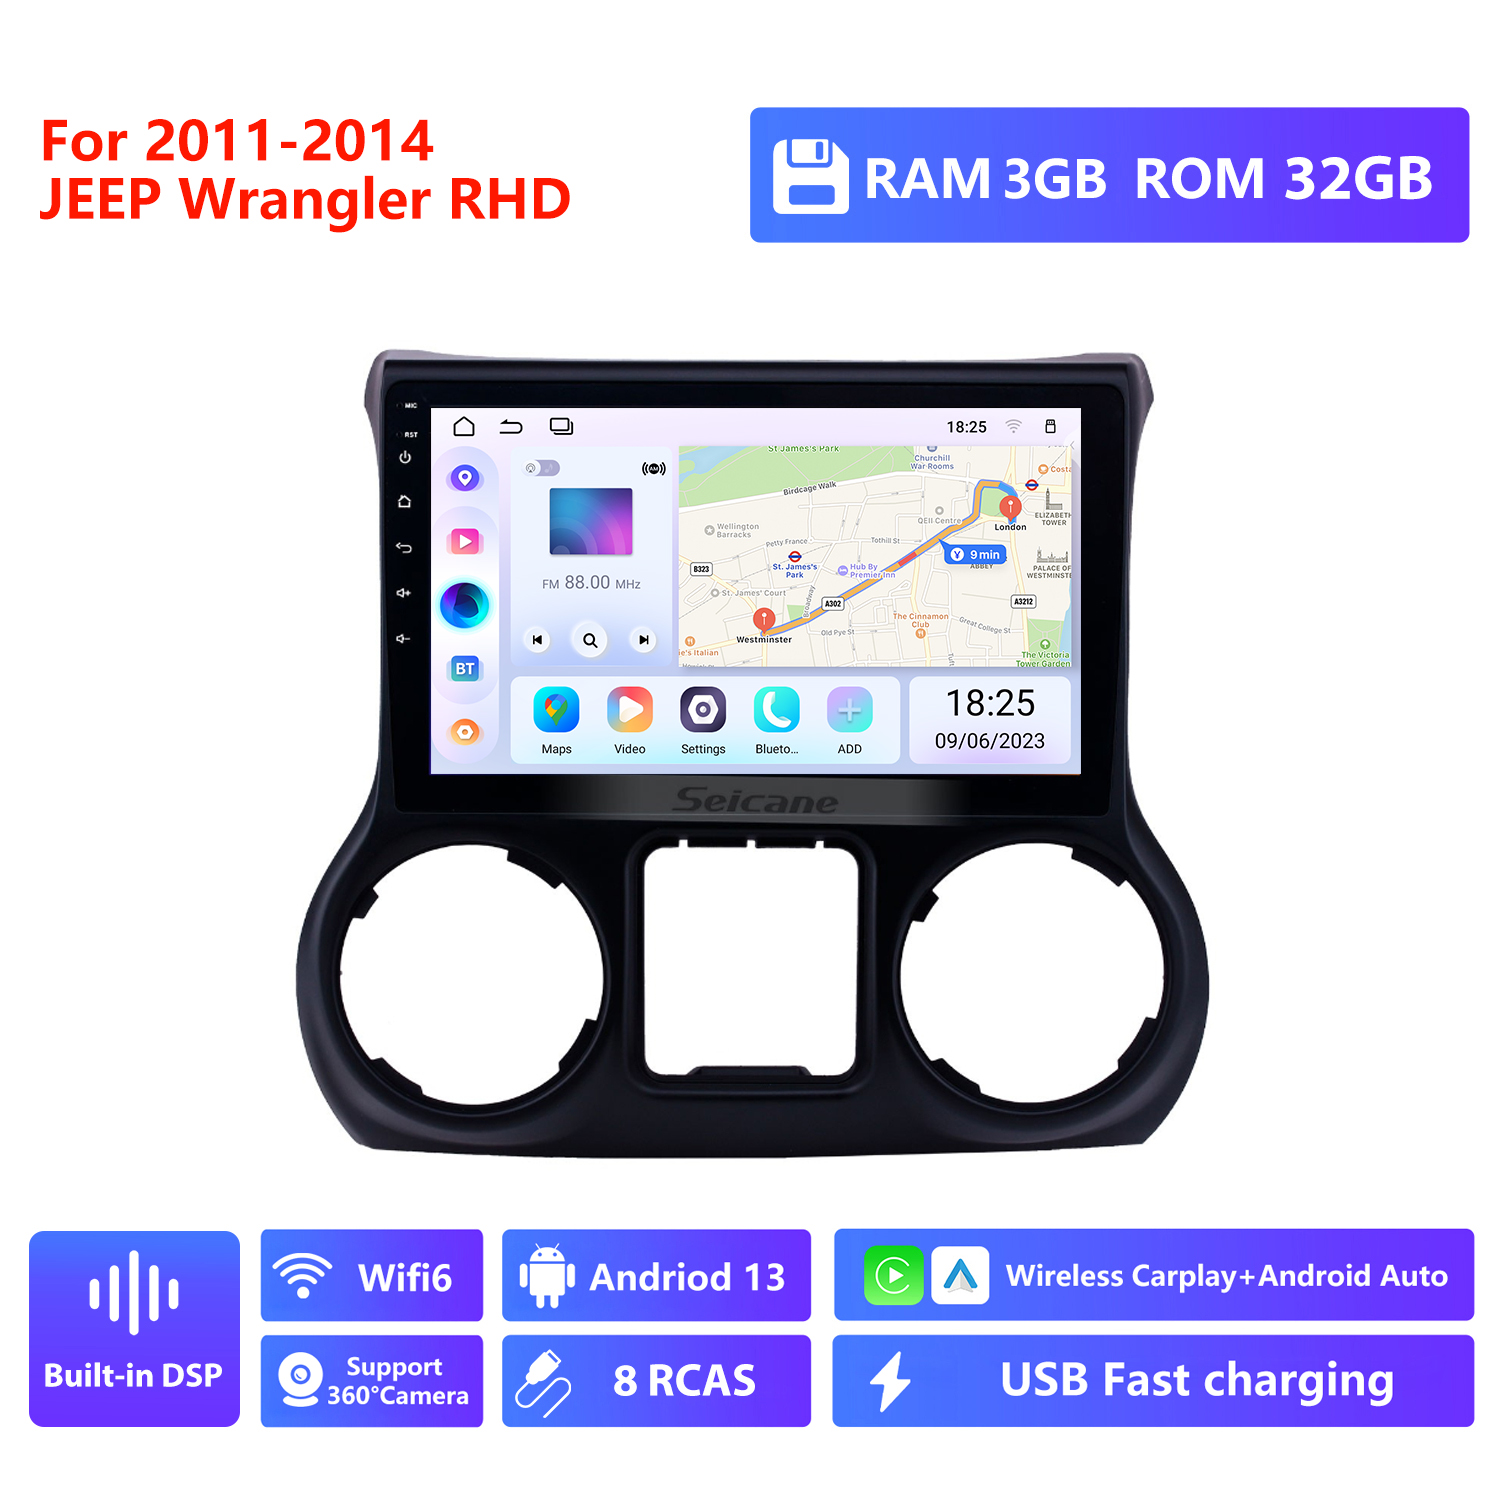 RAM 3G,ROM 32G,2011-2014,RHD